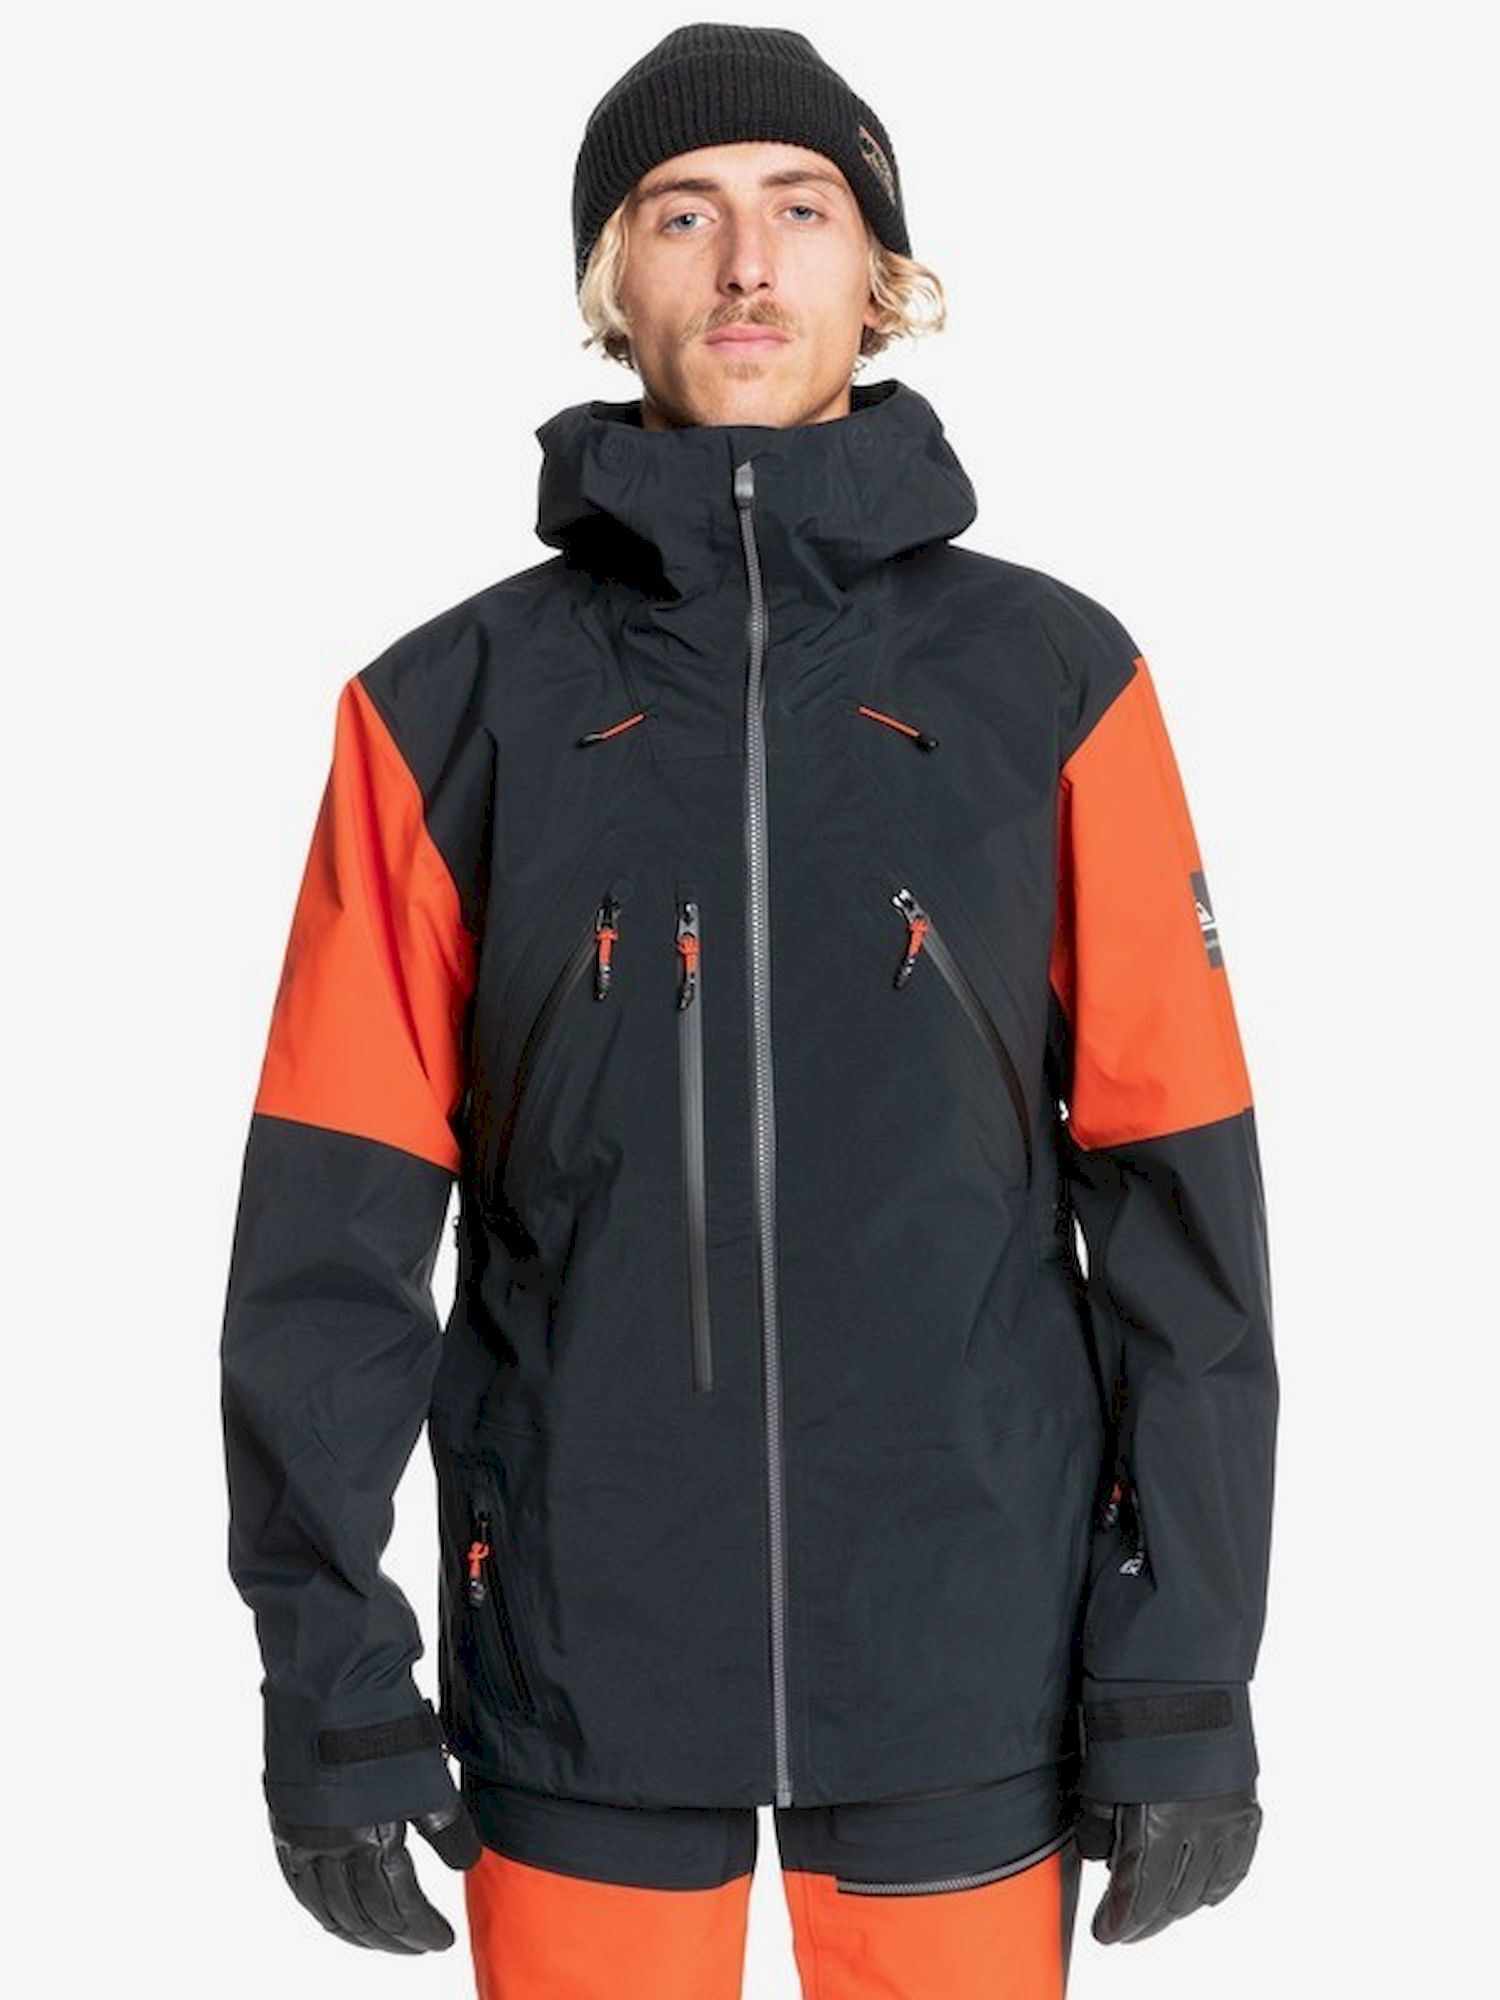 Highline Pro 3L Gore - Waterproof jacket - Men's